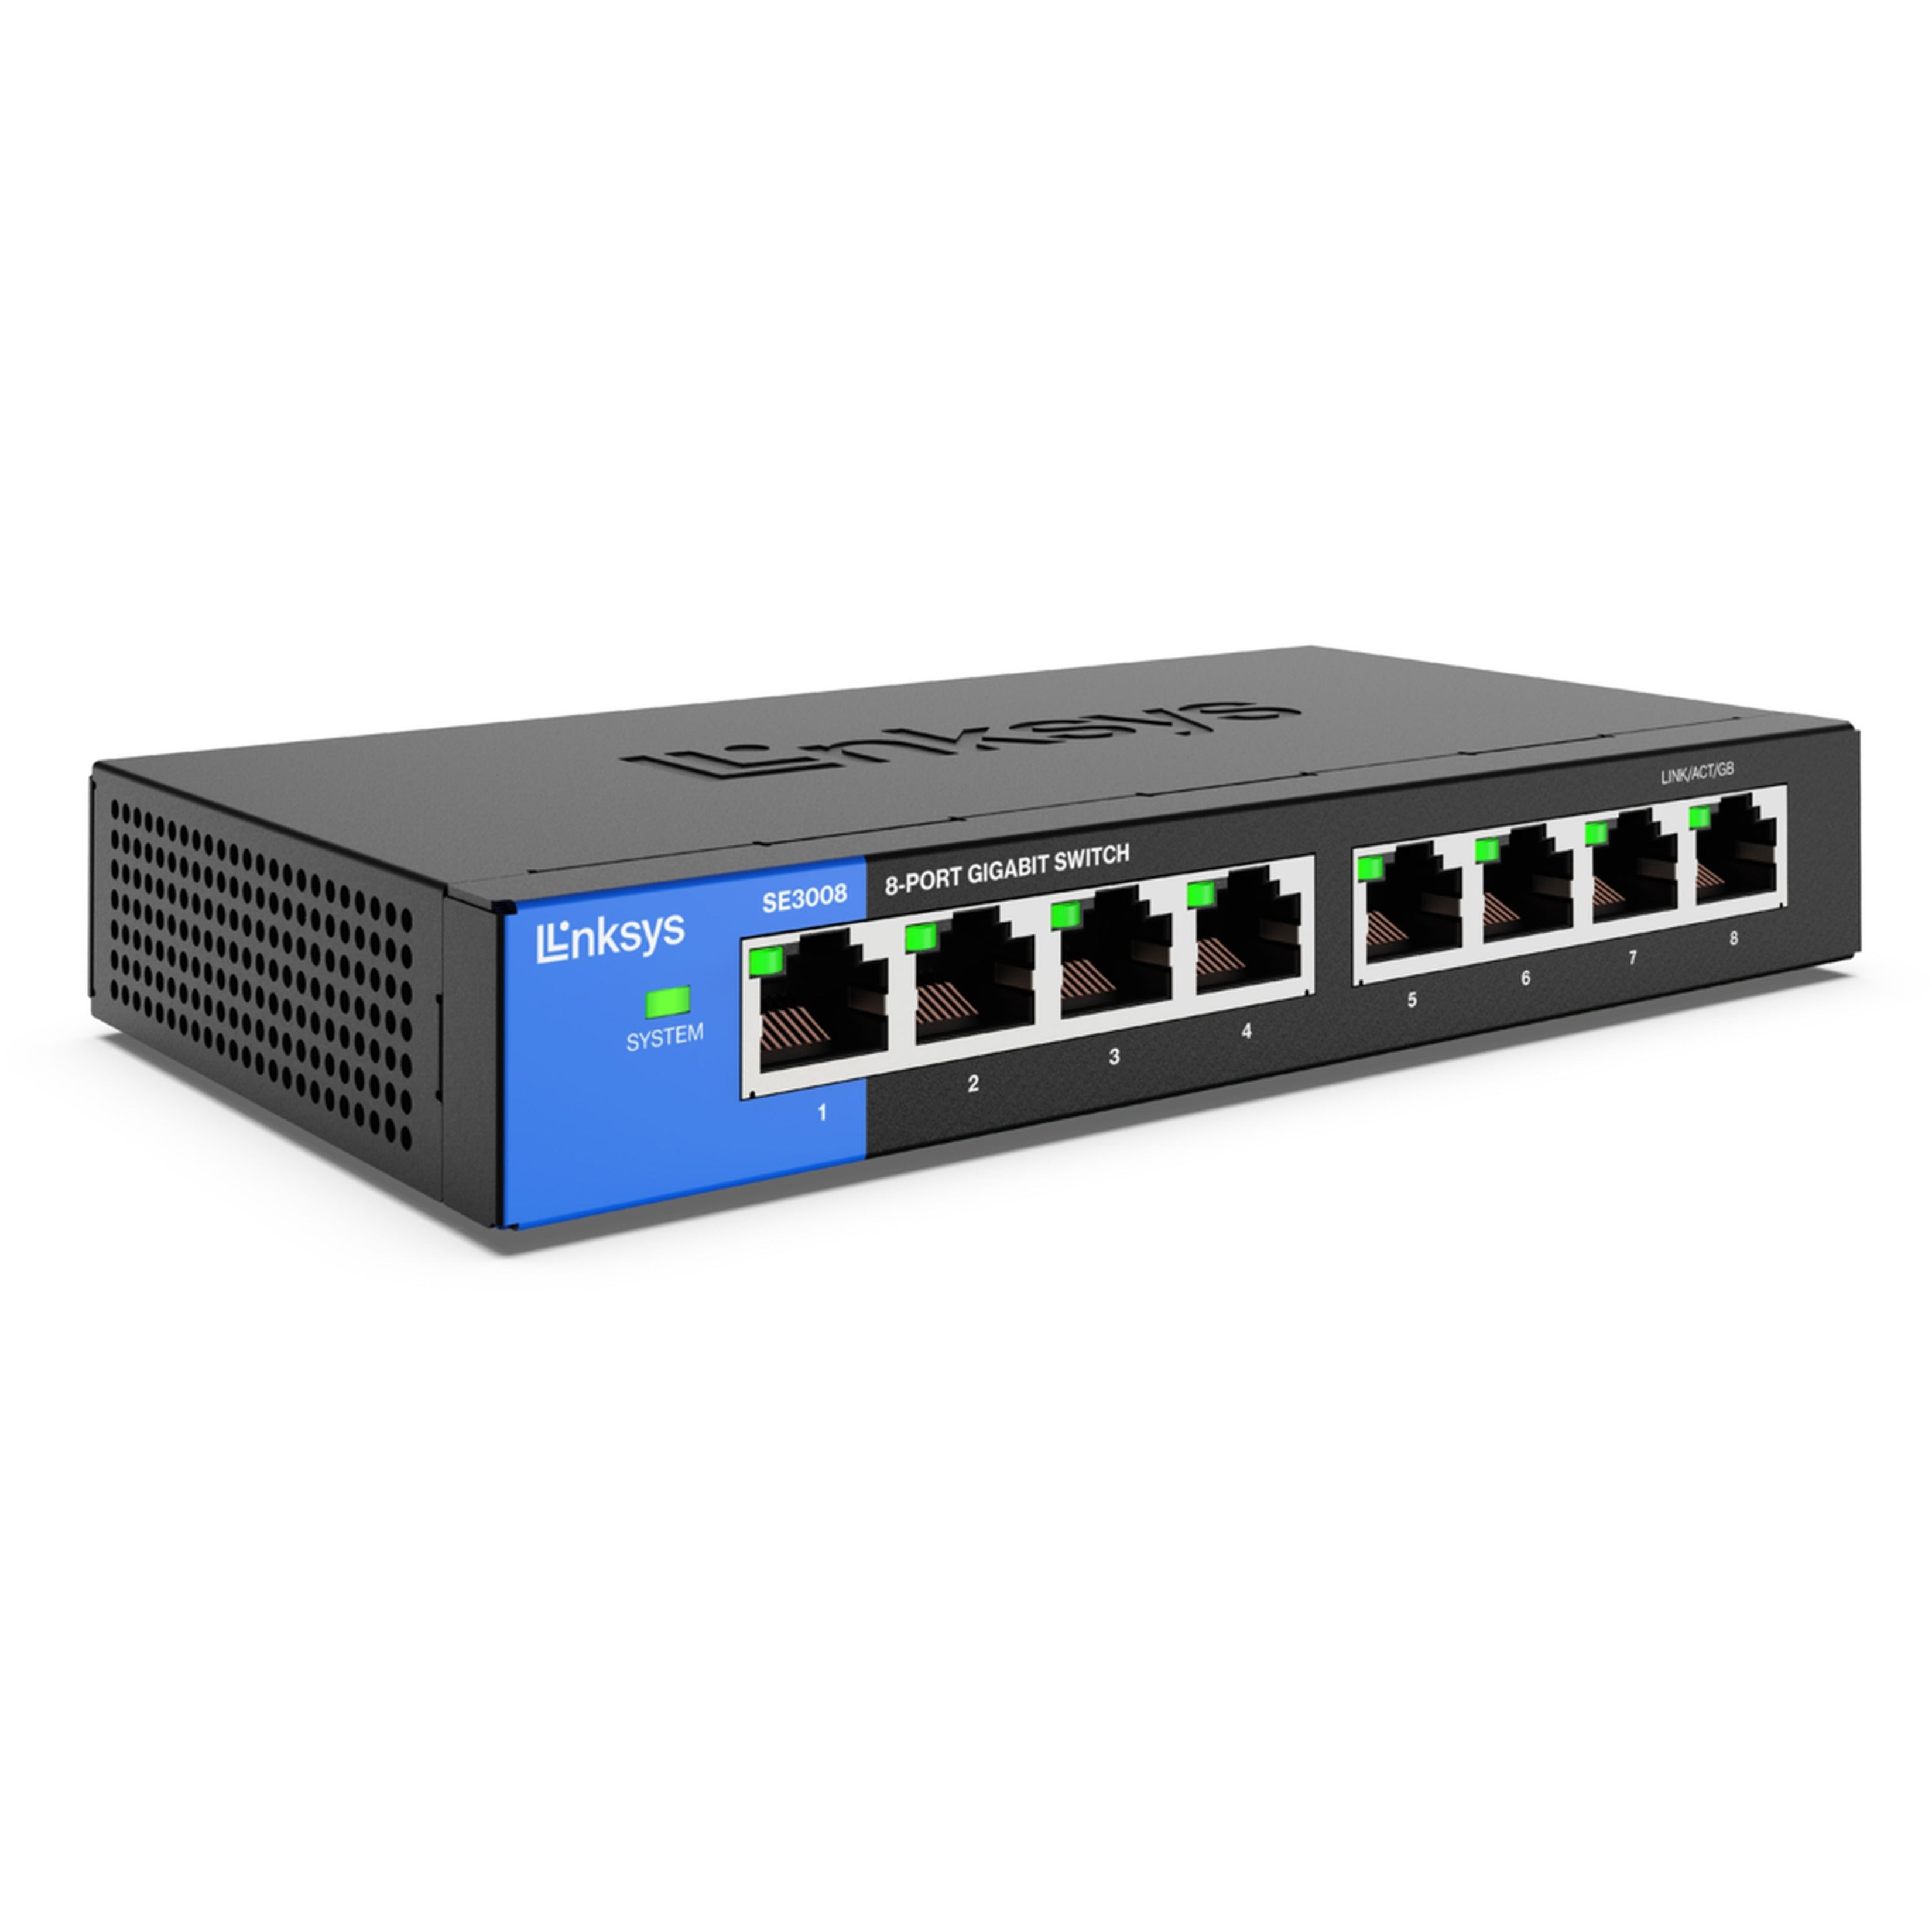 Linksys SE3008 8-Port Gigabit Ethernet Switch, High-Speed Network Connectivity